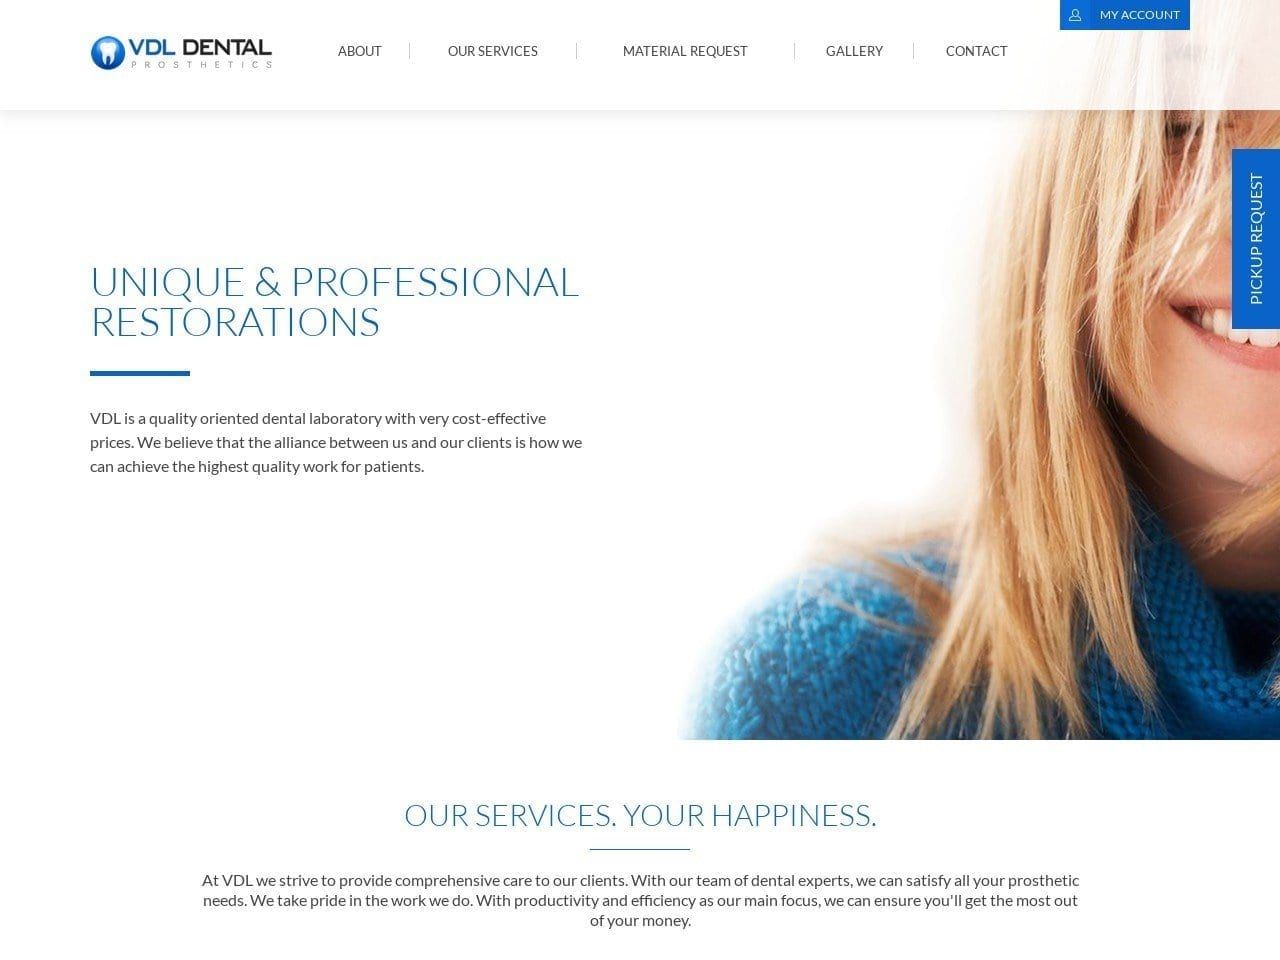 VDL Dental Prosthetics Website Screenshot from vdldental.com